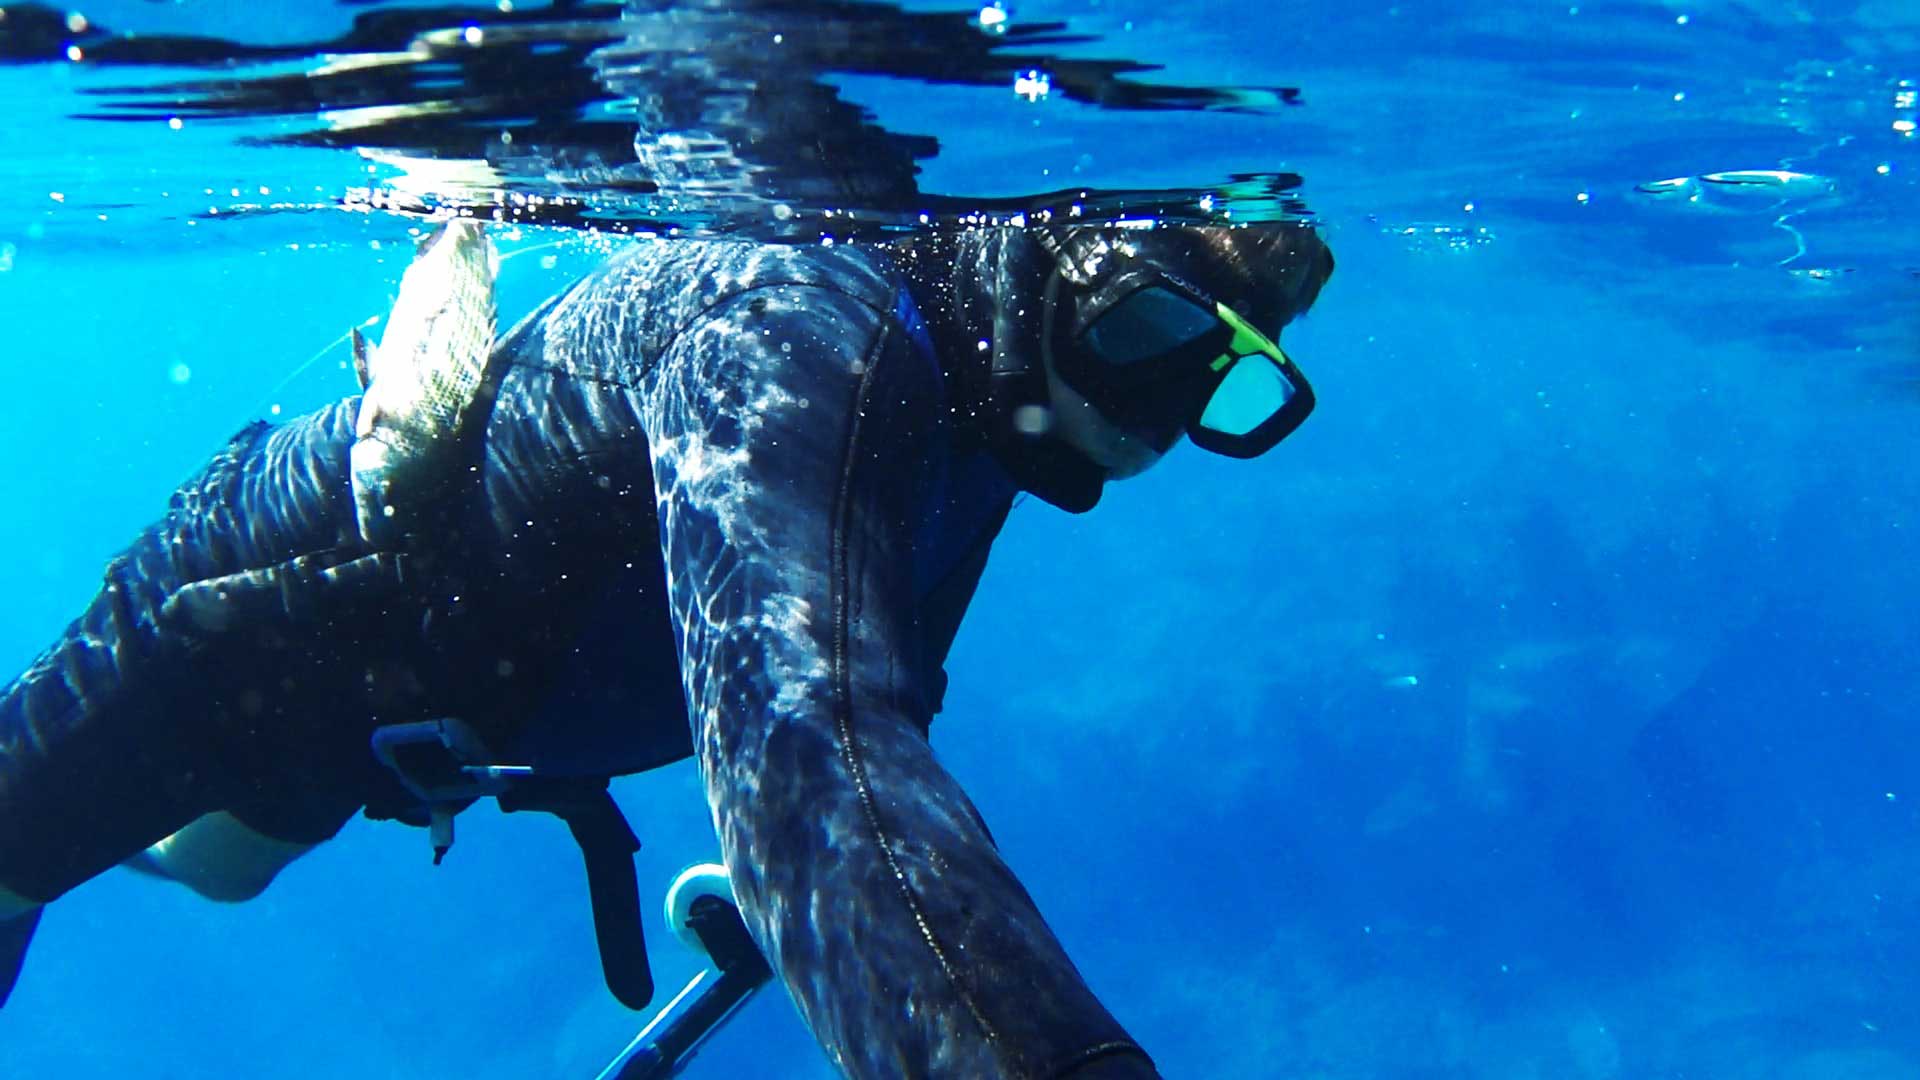 Ideal scuba snorkel easy entry Short John wetsuit 2mm thermal lined neoprene 